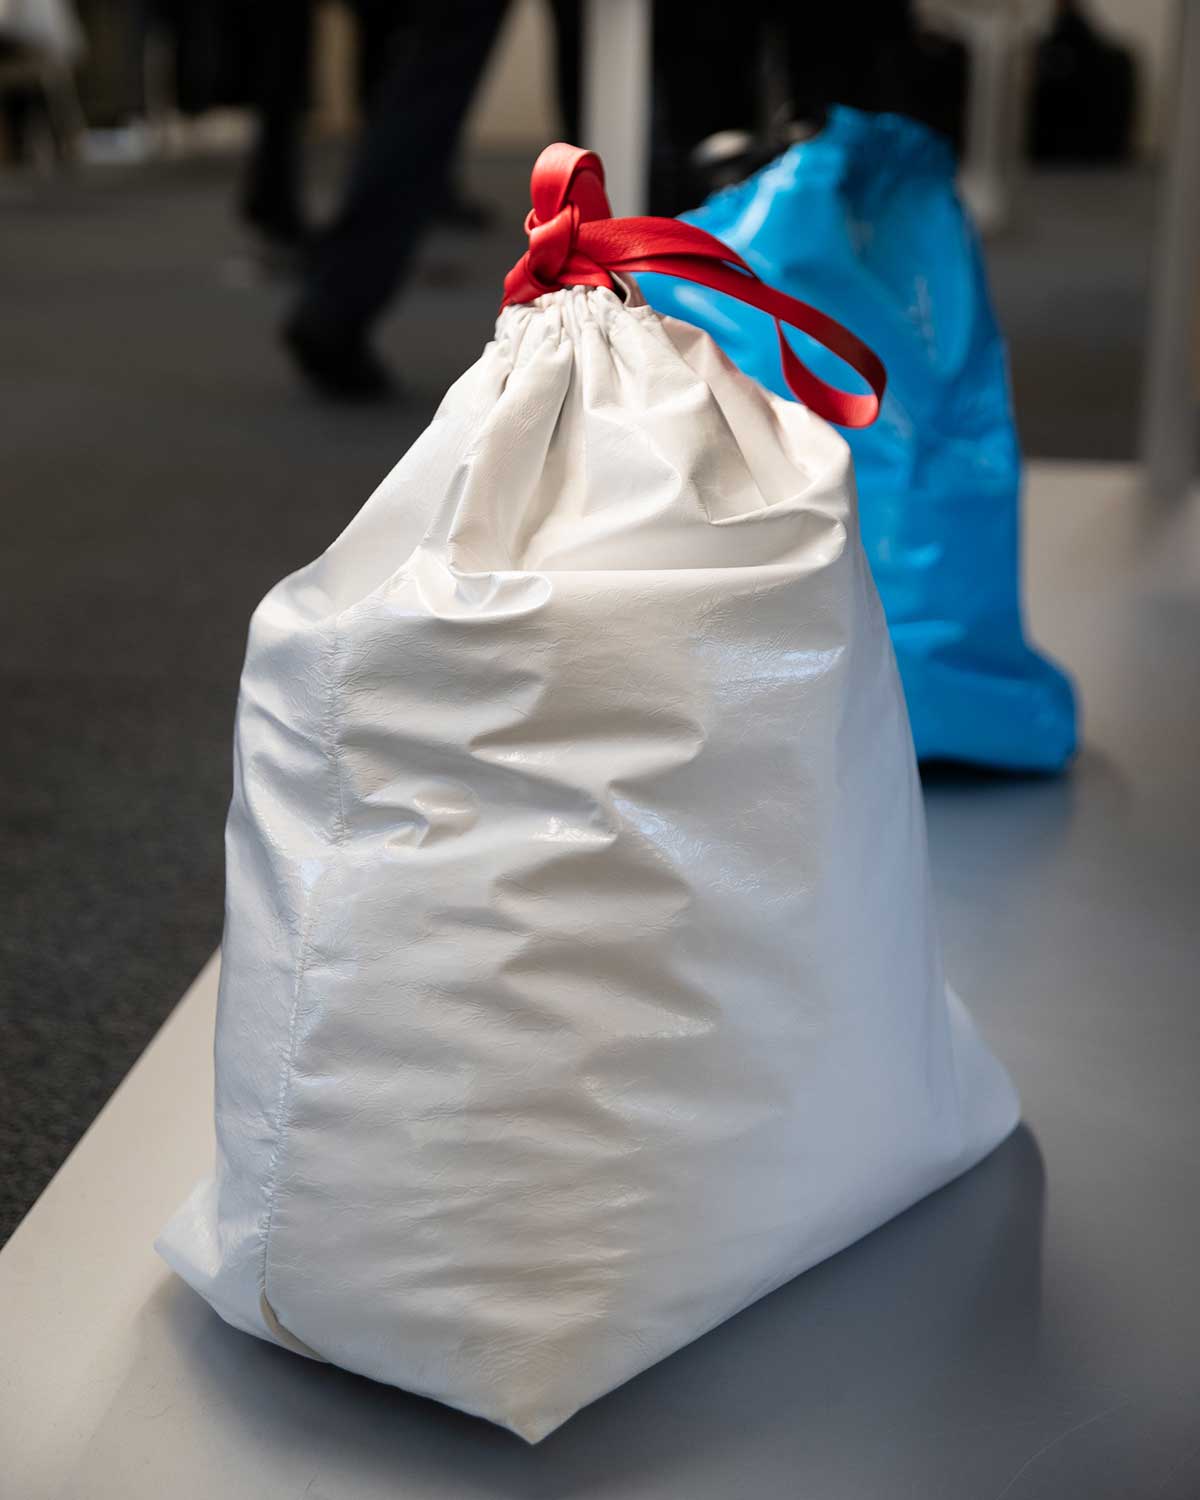 Balenciaga Echoes the Trash Bag With New Crush Bag